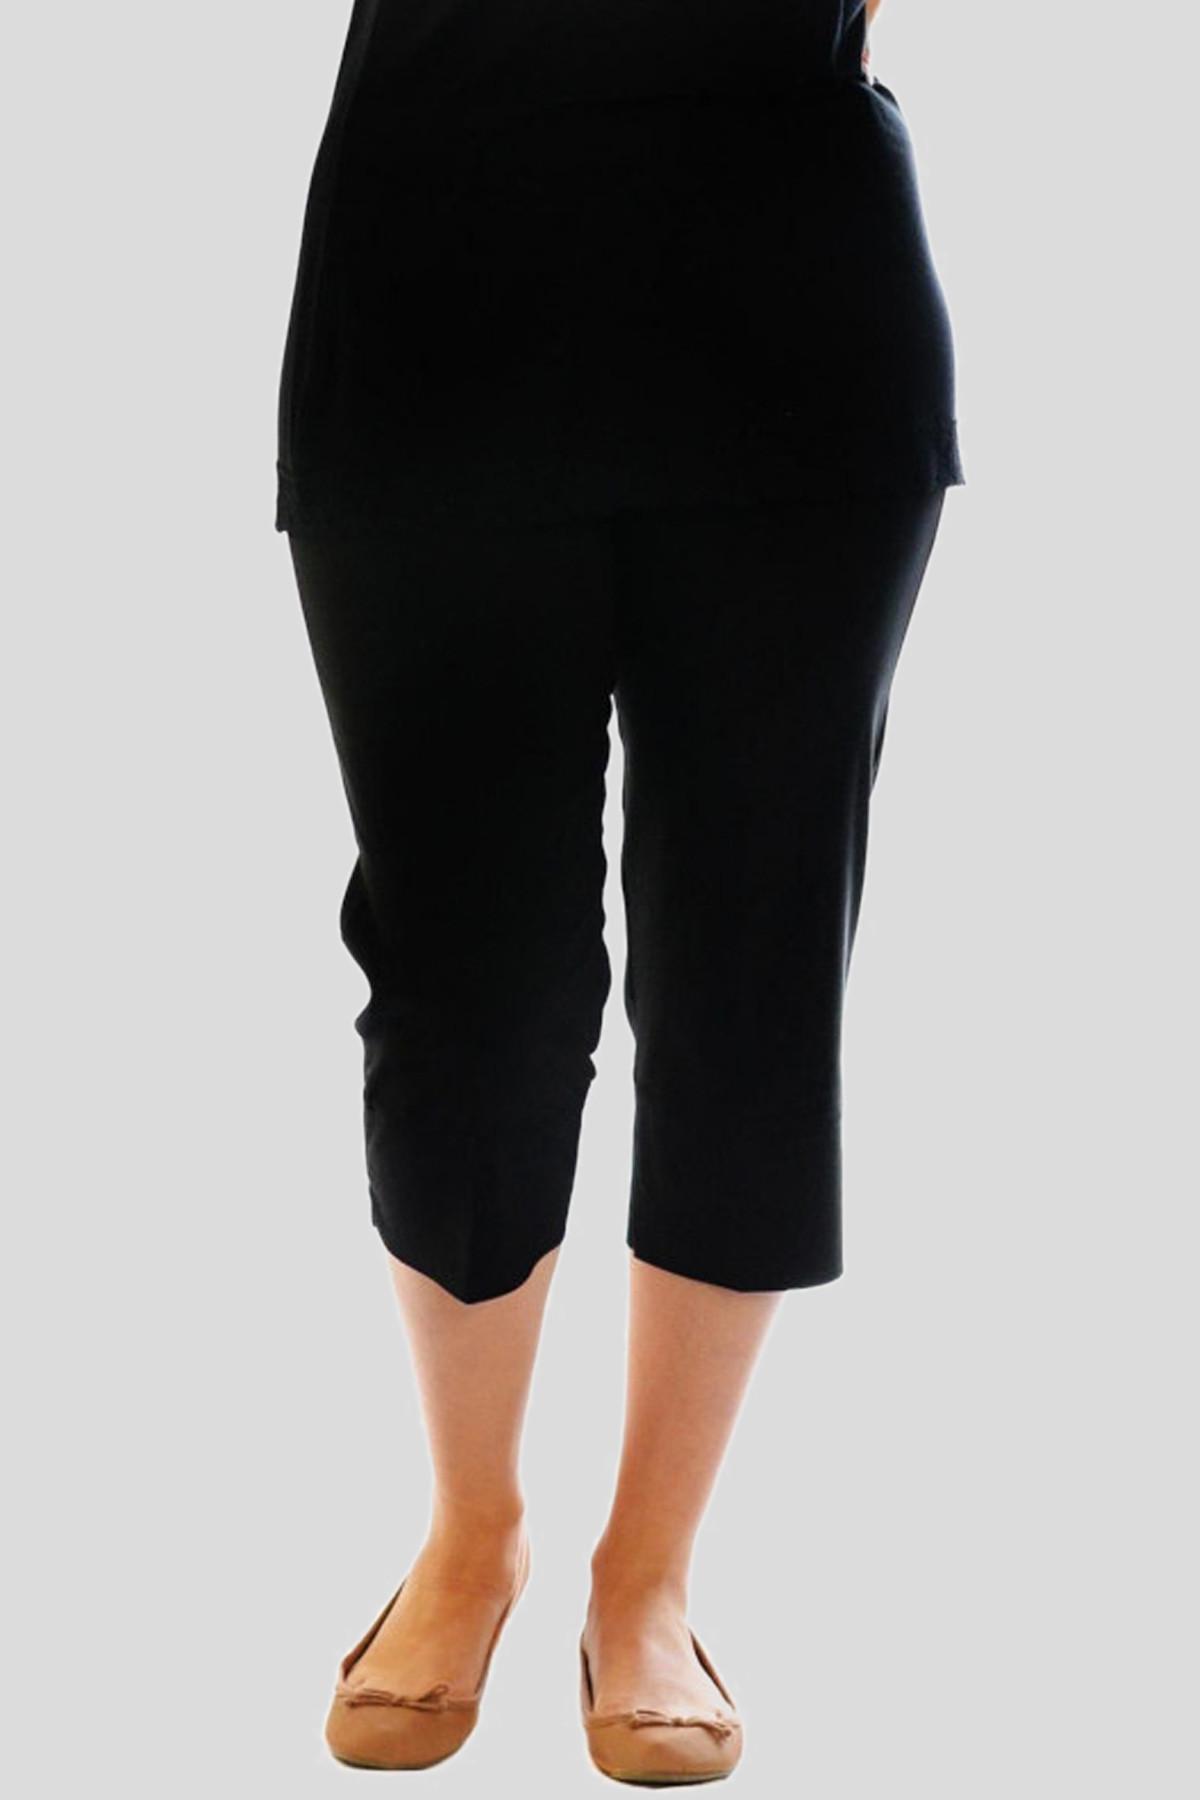 Janelle Plus Size 3/4 Length Capri Trousers Pants Shorts 16-24 - Plus Size  Palazzo/Leggings - Plus Sizes